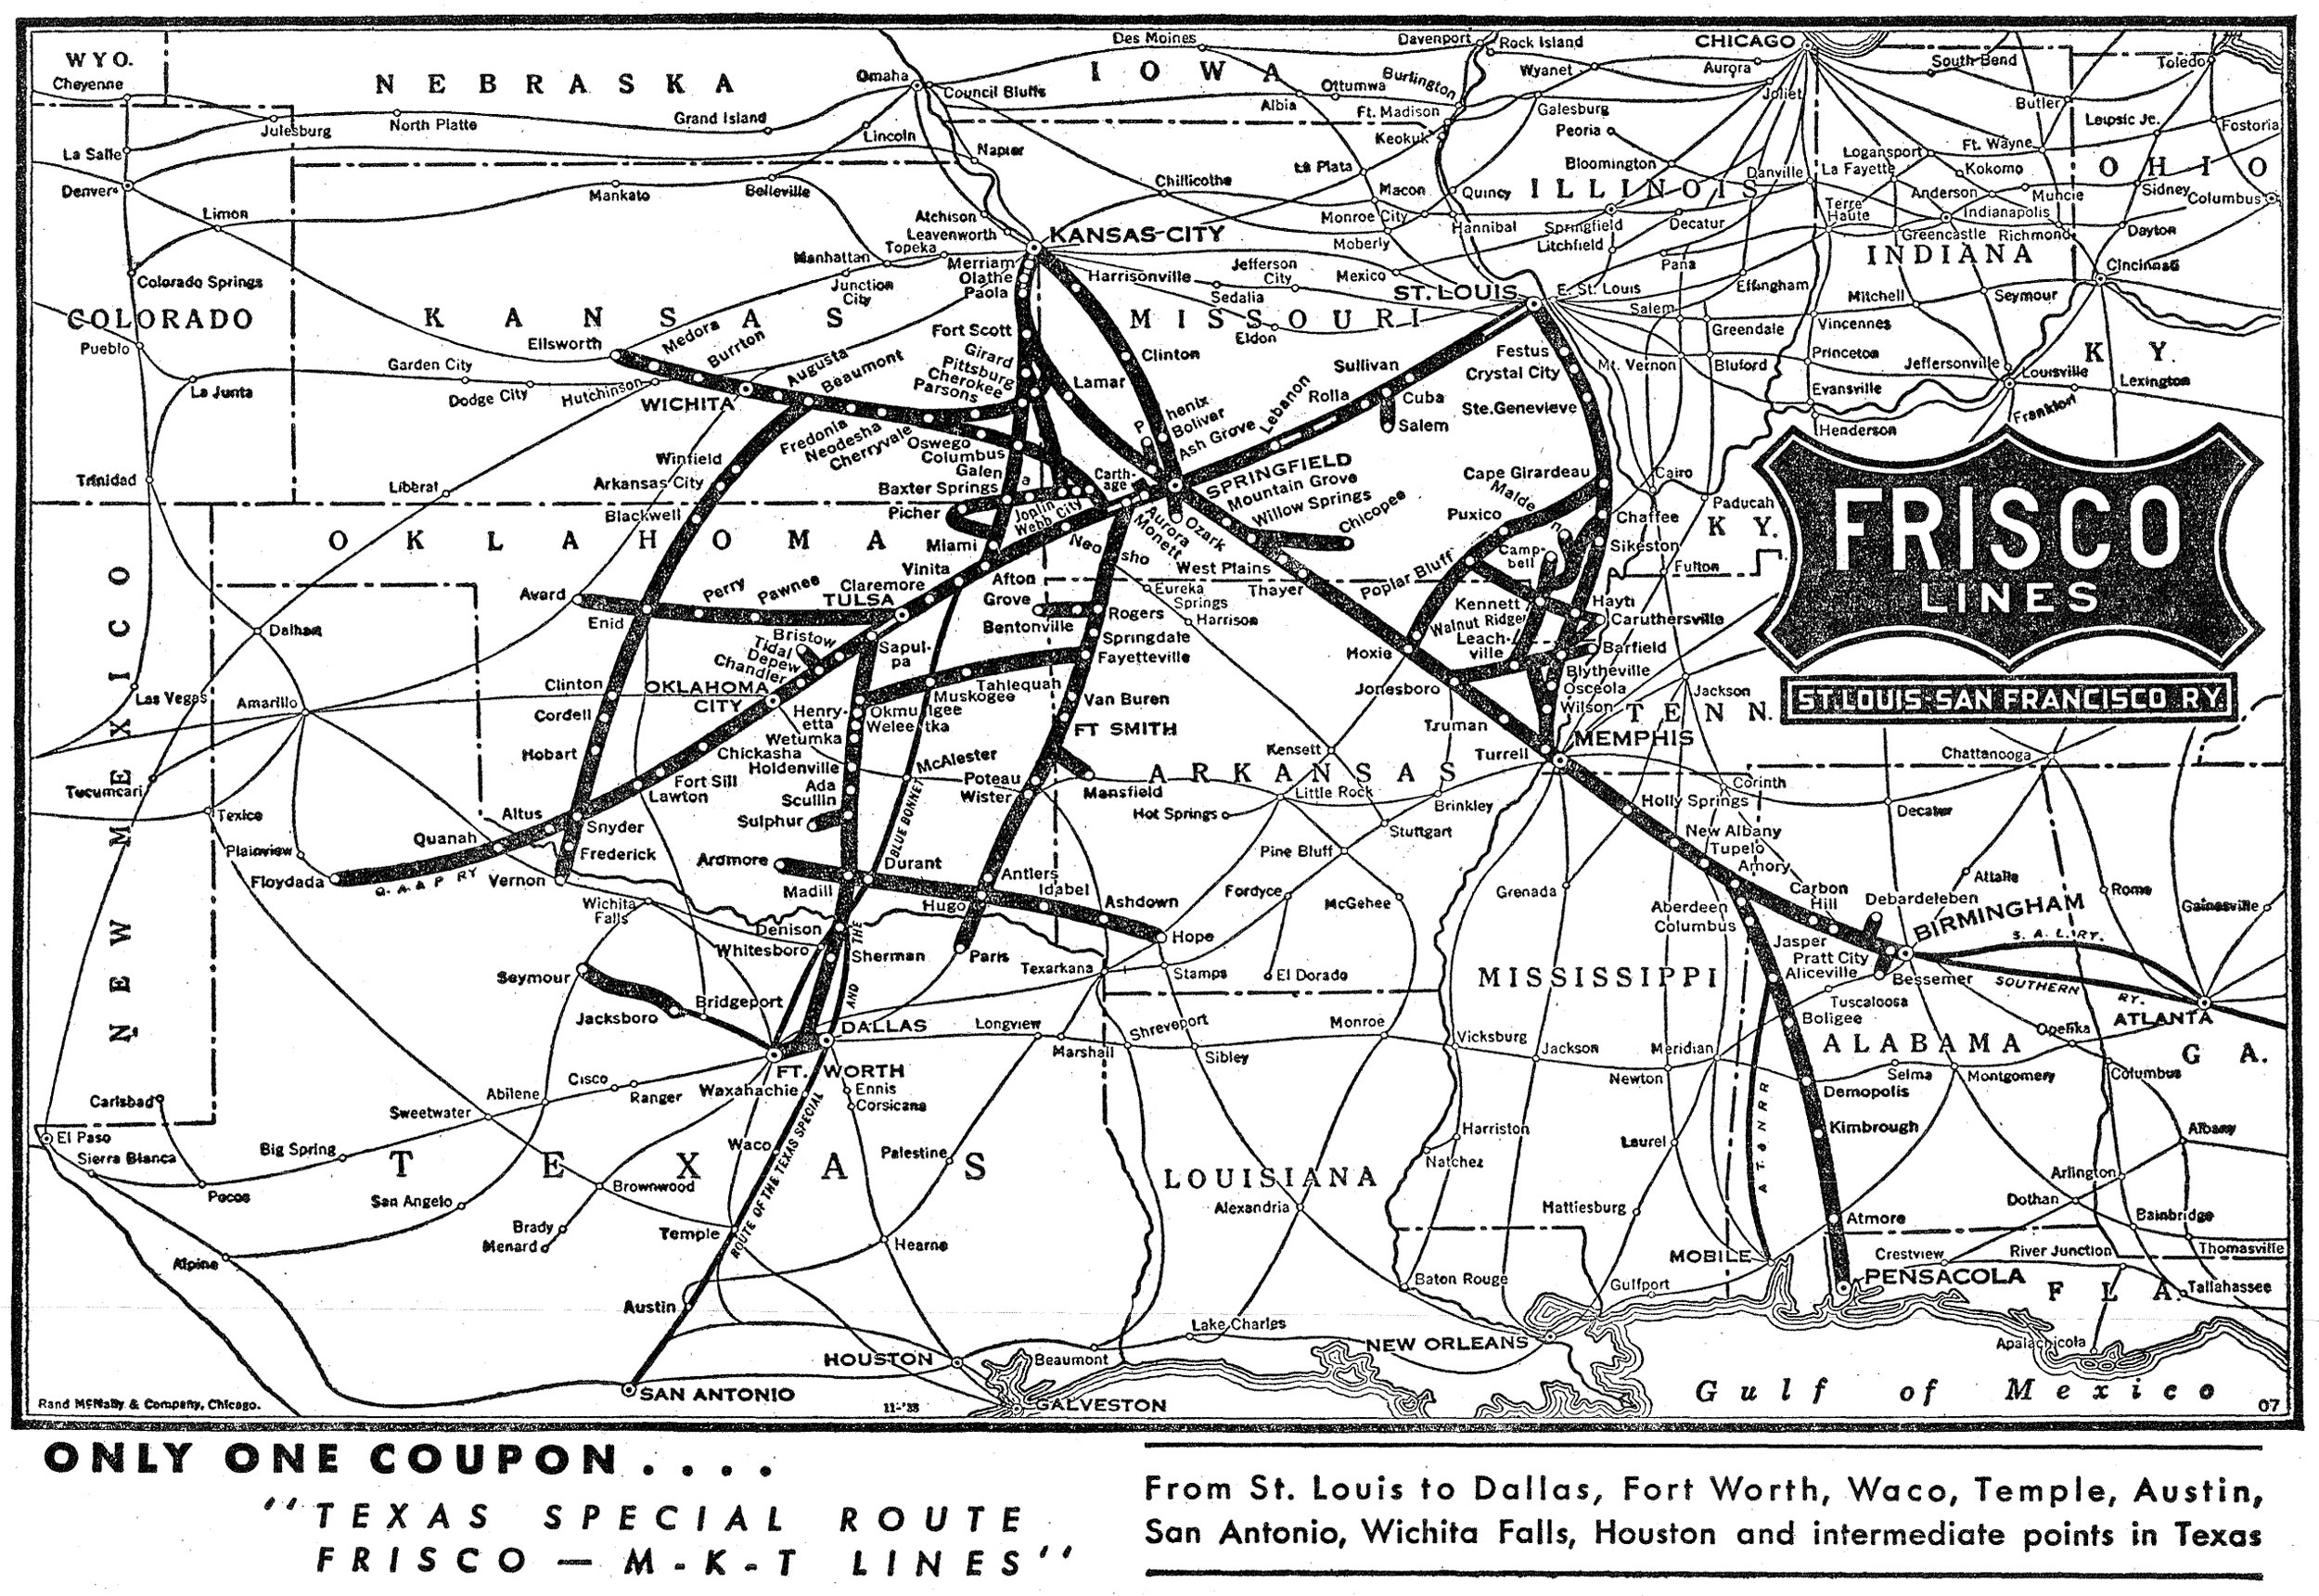 The Frisco, The St. Louis-San Francisco Railway